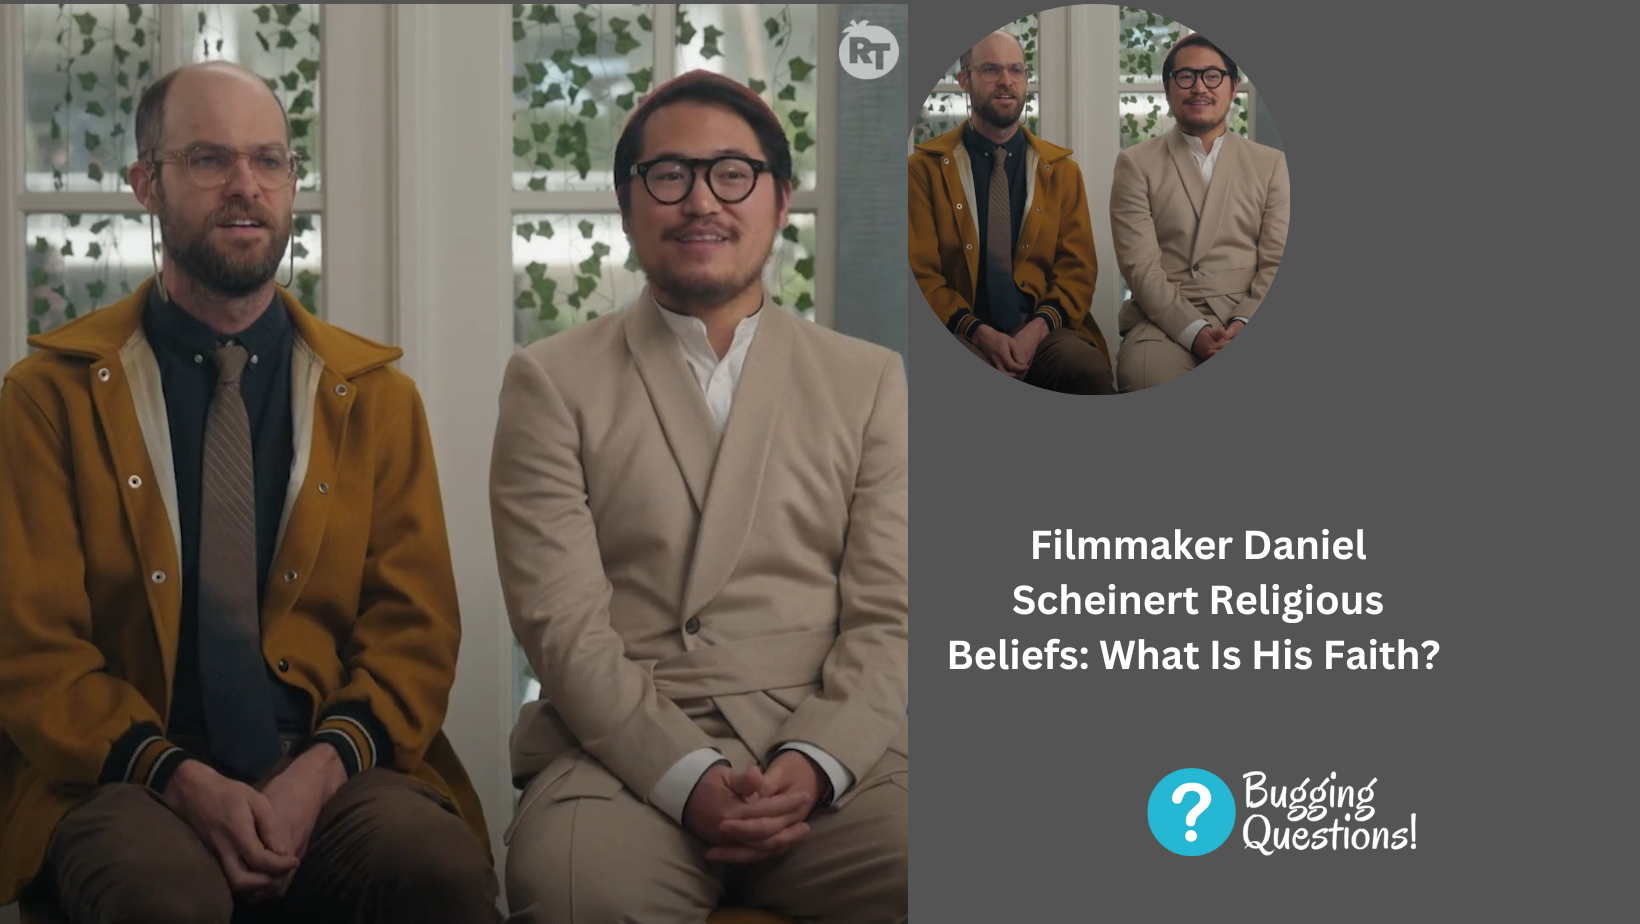 Filmmaker Daniel Scheinert Religious Beliefs: What Is His Faith?